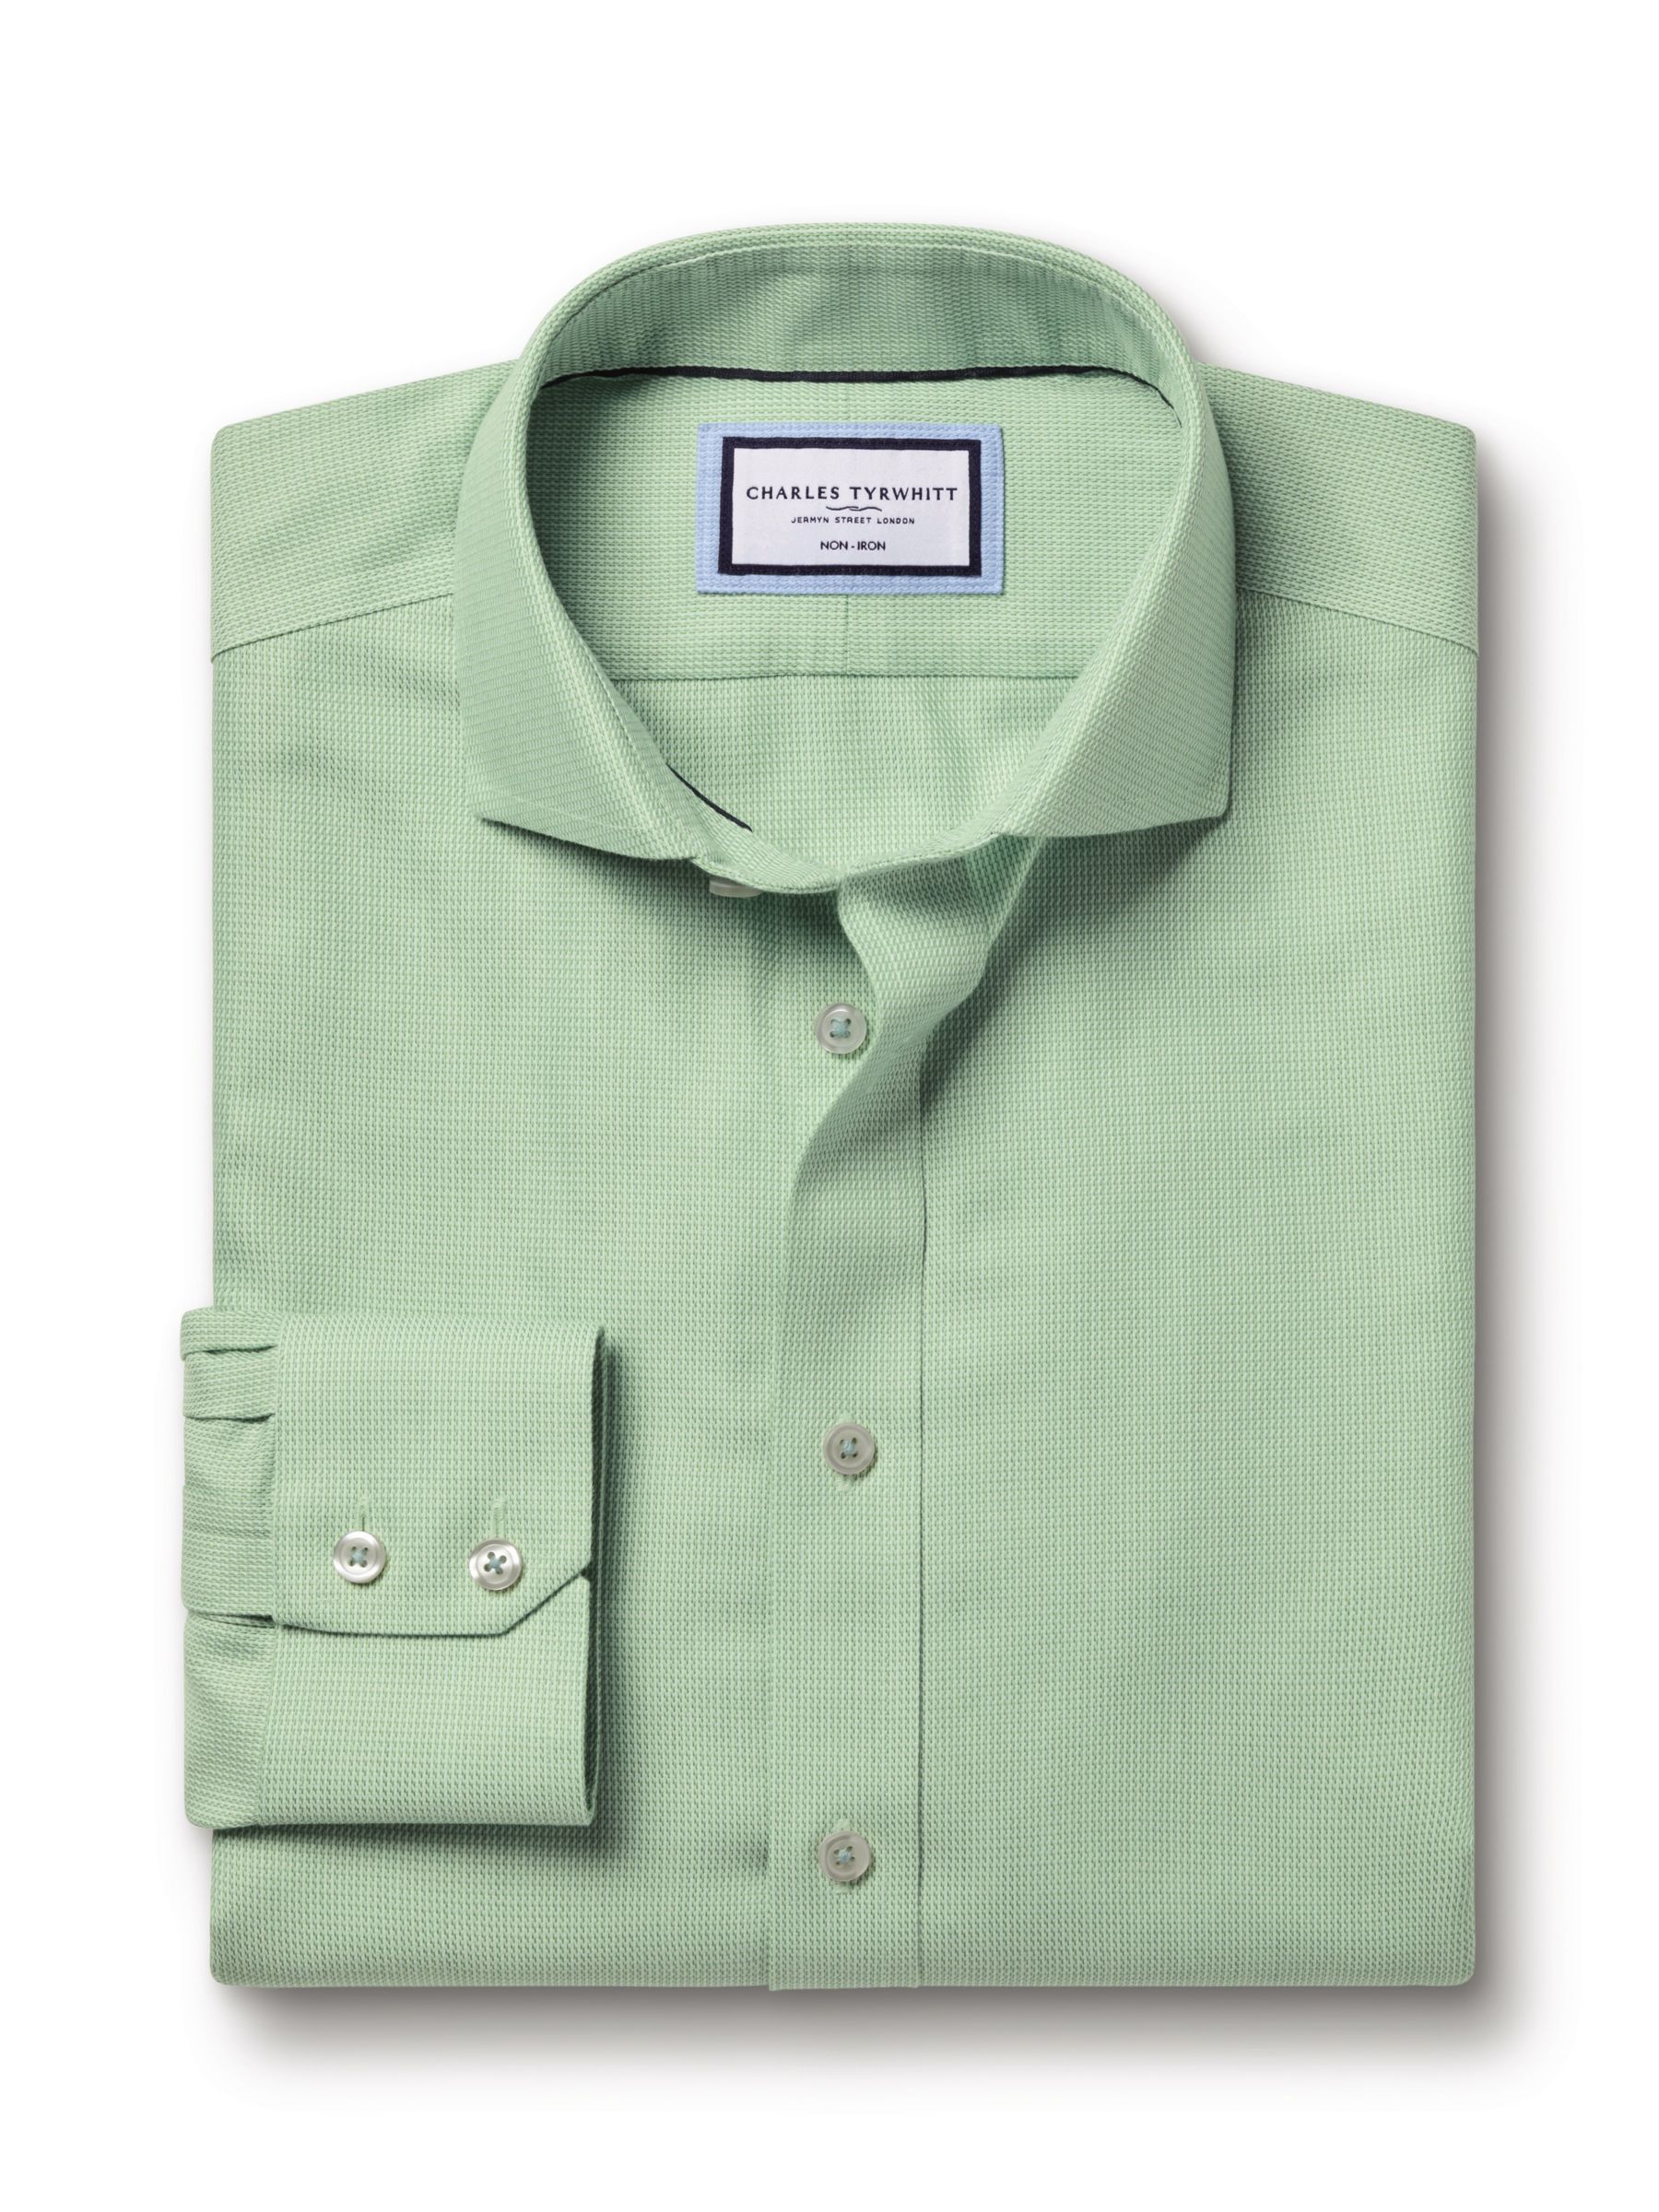 Charles Tyrwhitt Non-Iron Mayfair Textured Dobby Weave Shirt, Light Green, 14.5